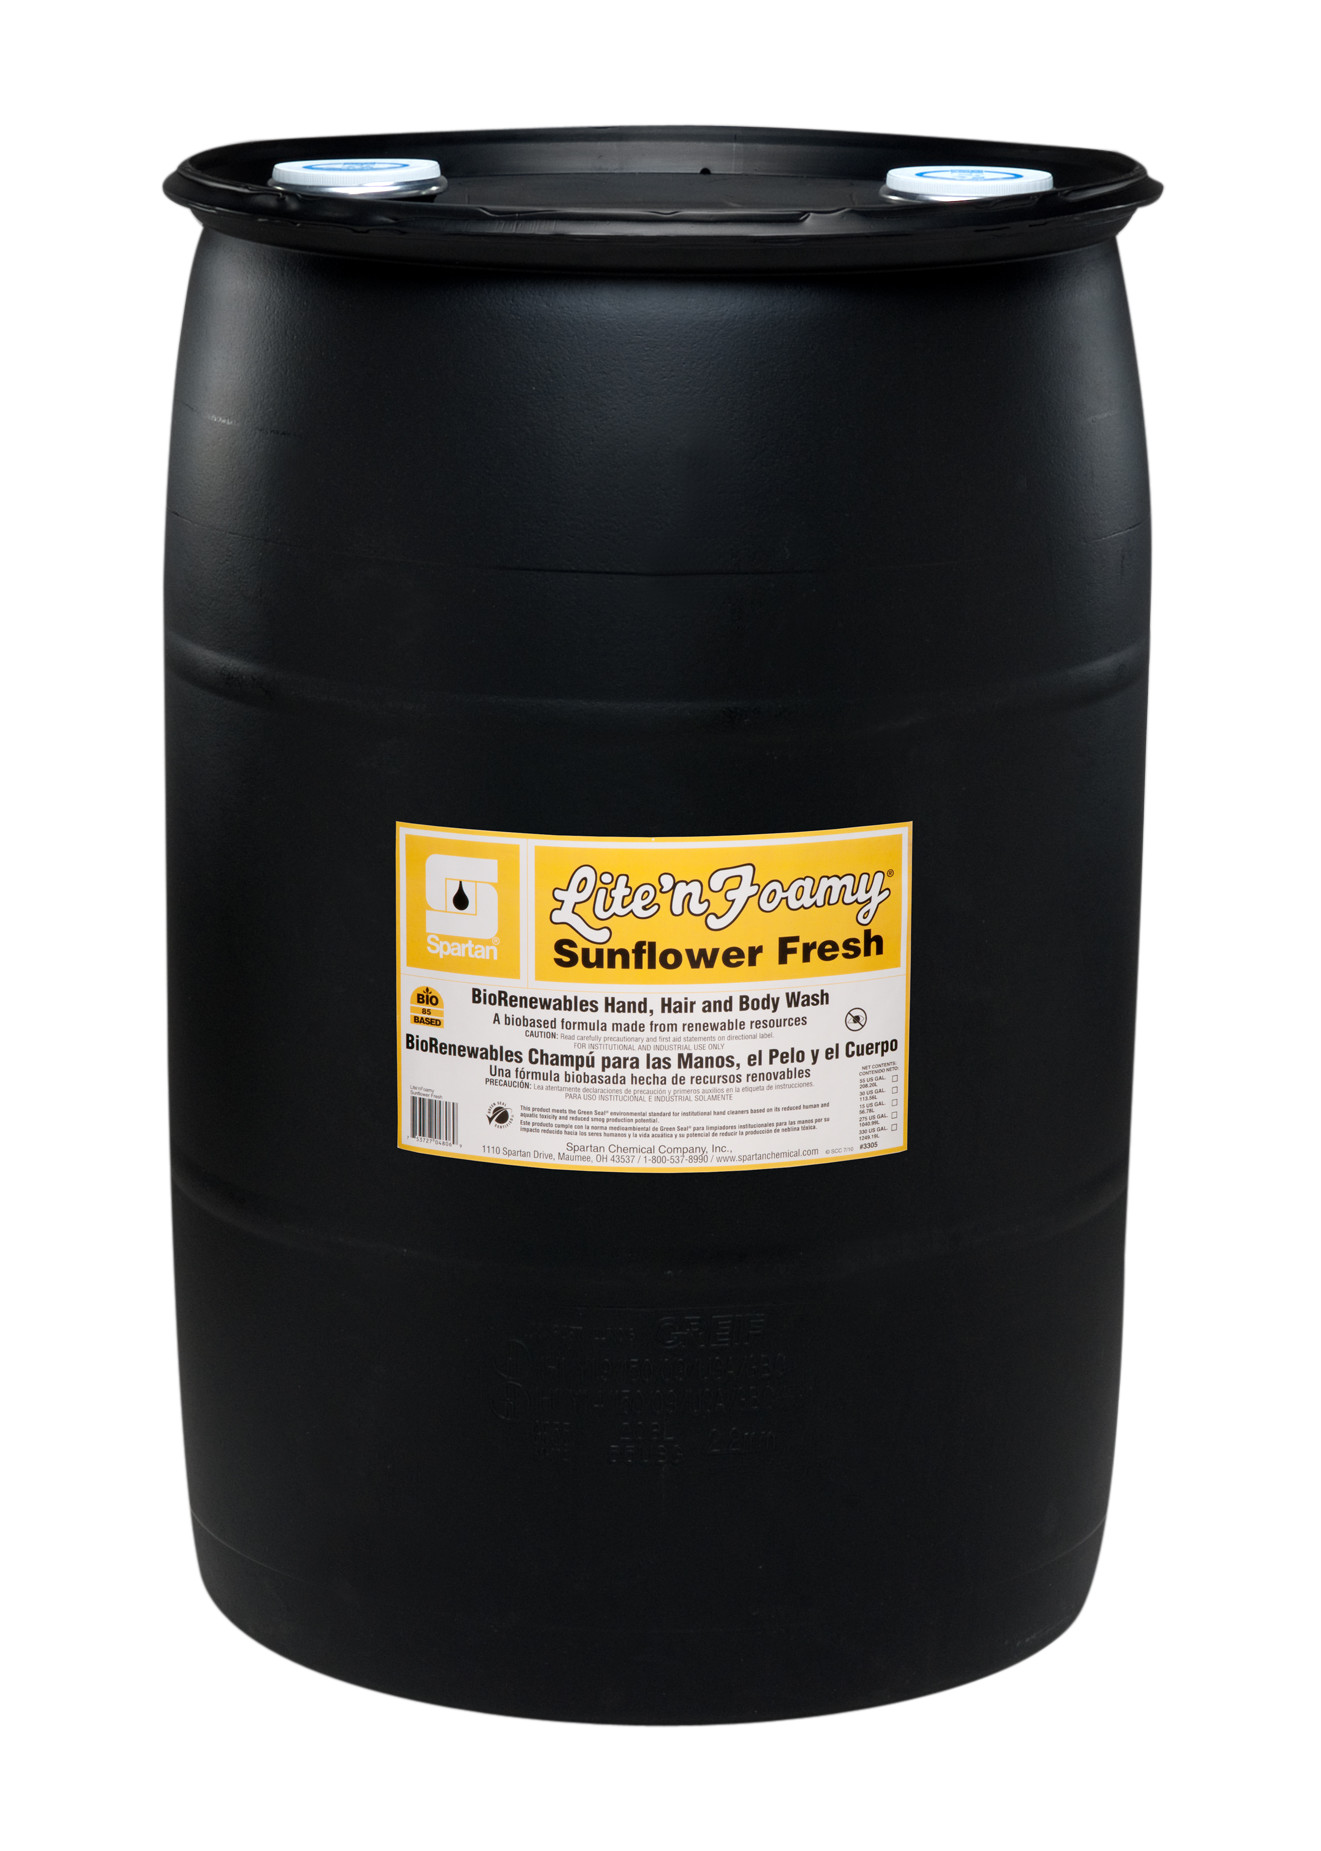 Spartan Chemical Company Lite'n Foamy Sunflower Fresh, 55 GAL DRUM